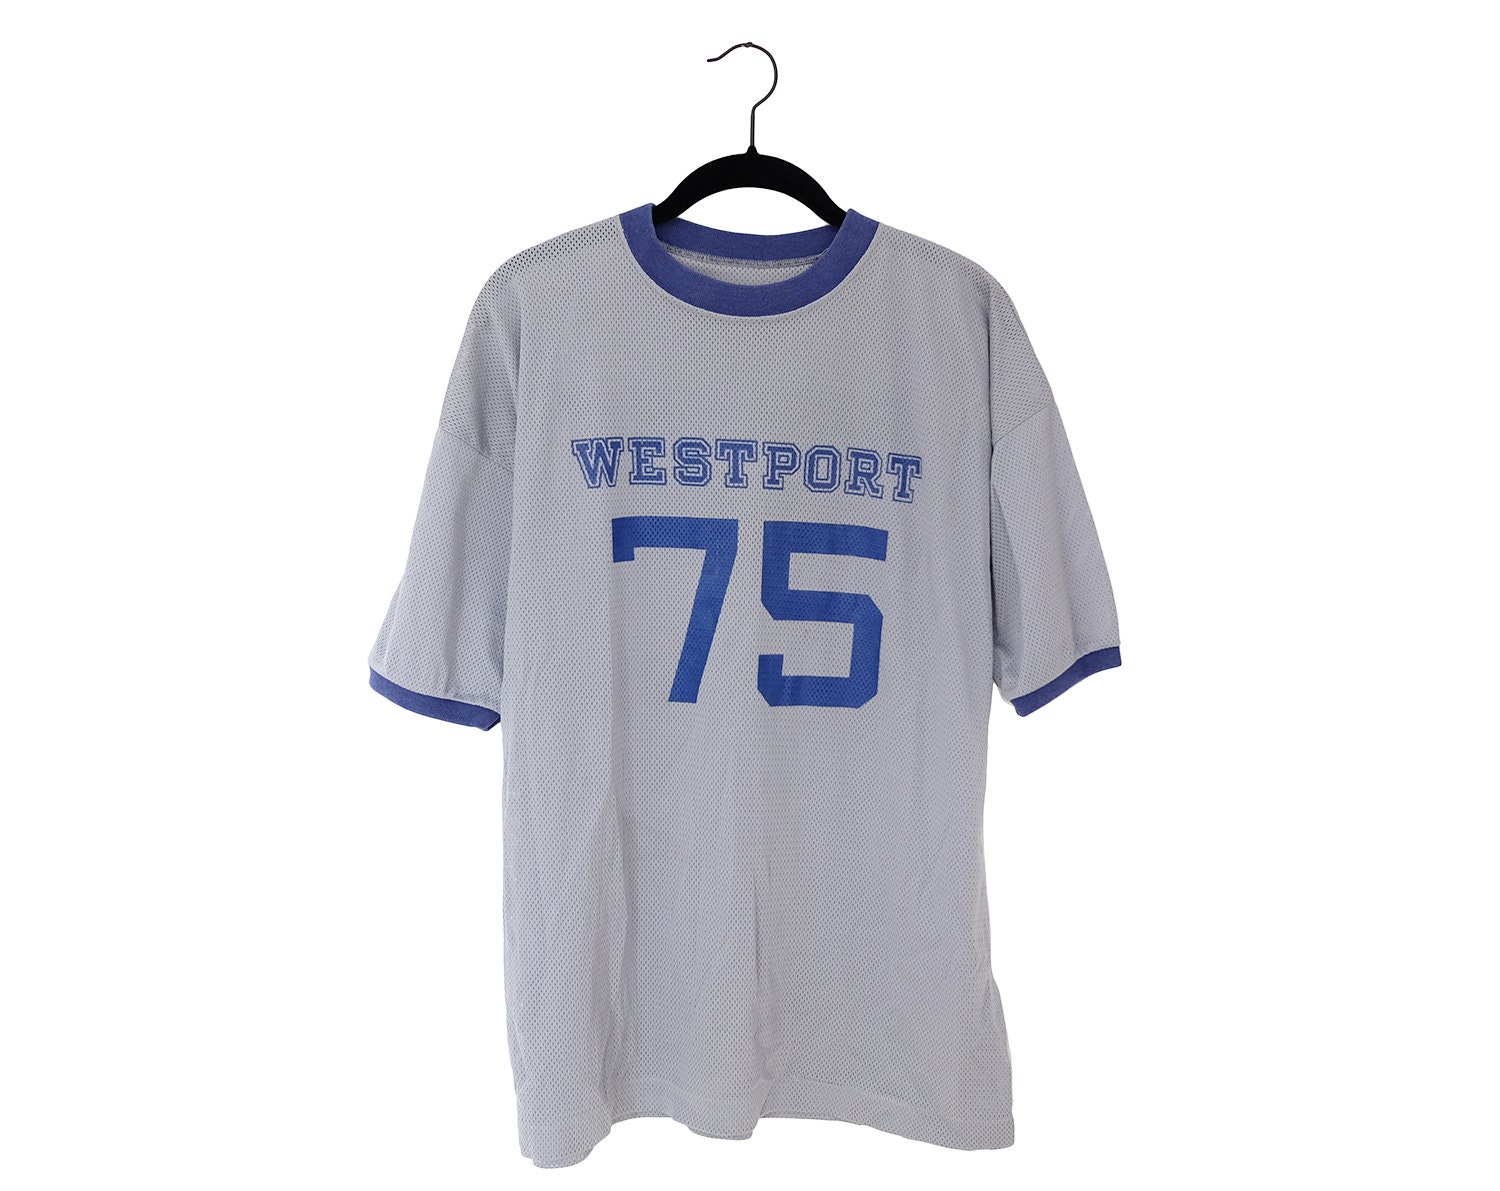 Vintage 1960's Champion Products Inc. WESTPORT 75 Gray & Blue Mesh